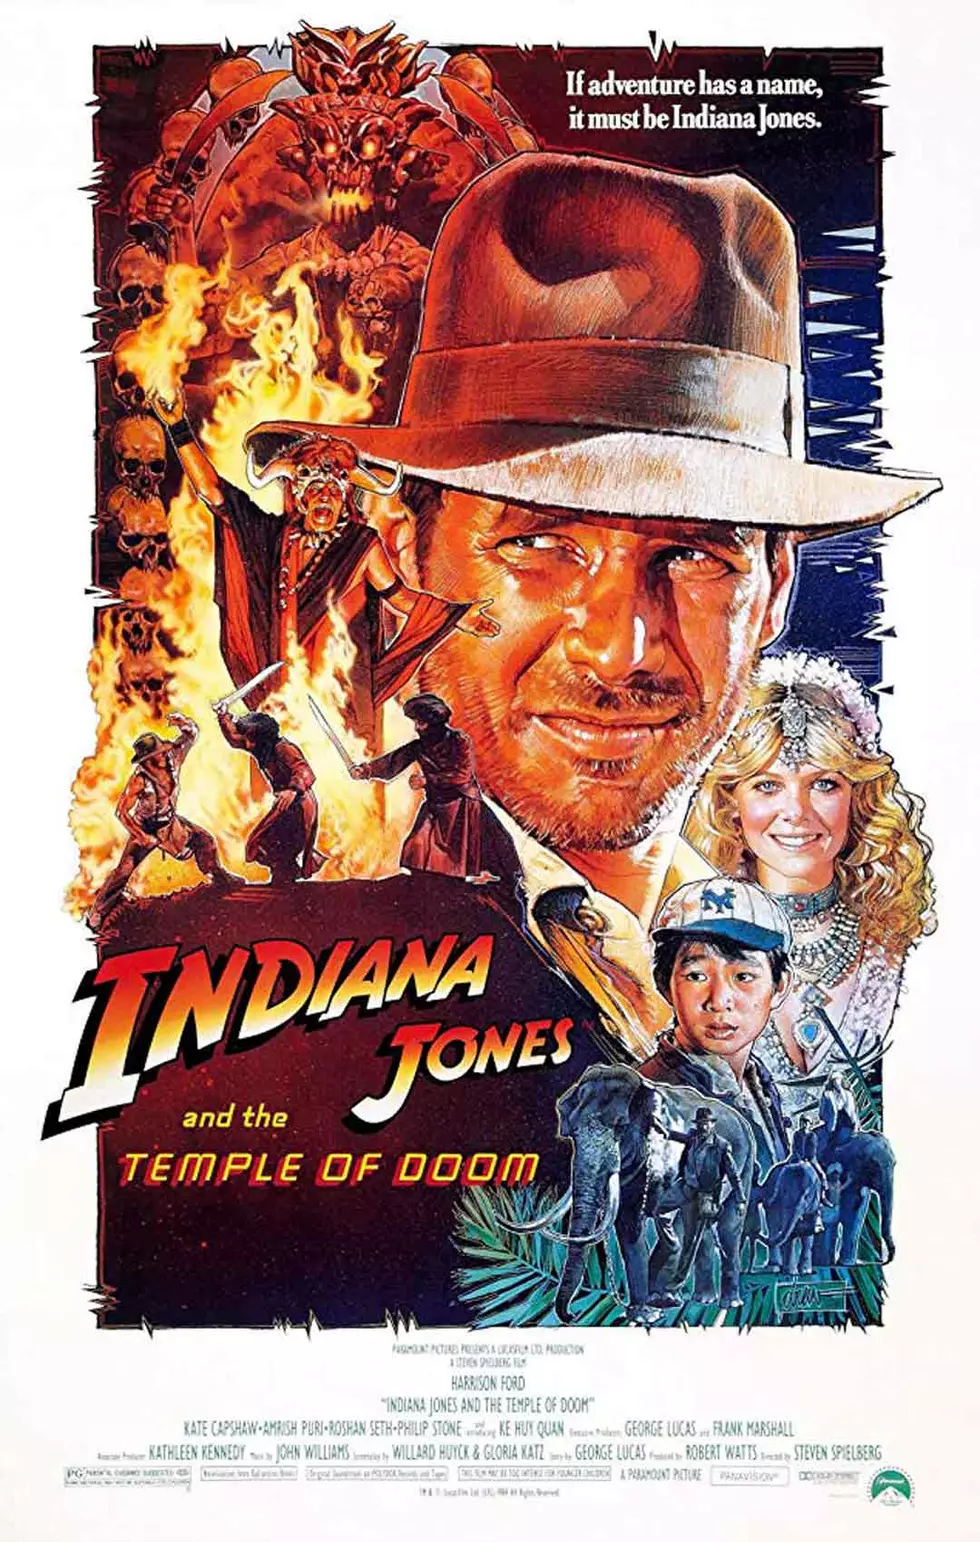 Indiana Jones Movies Ranked Worst to Best